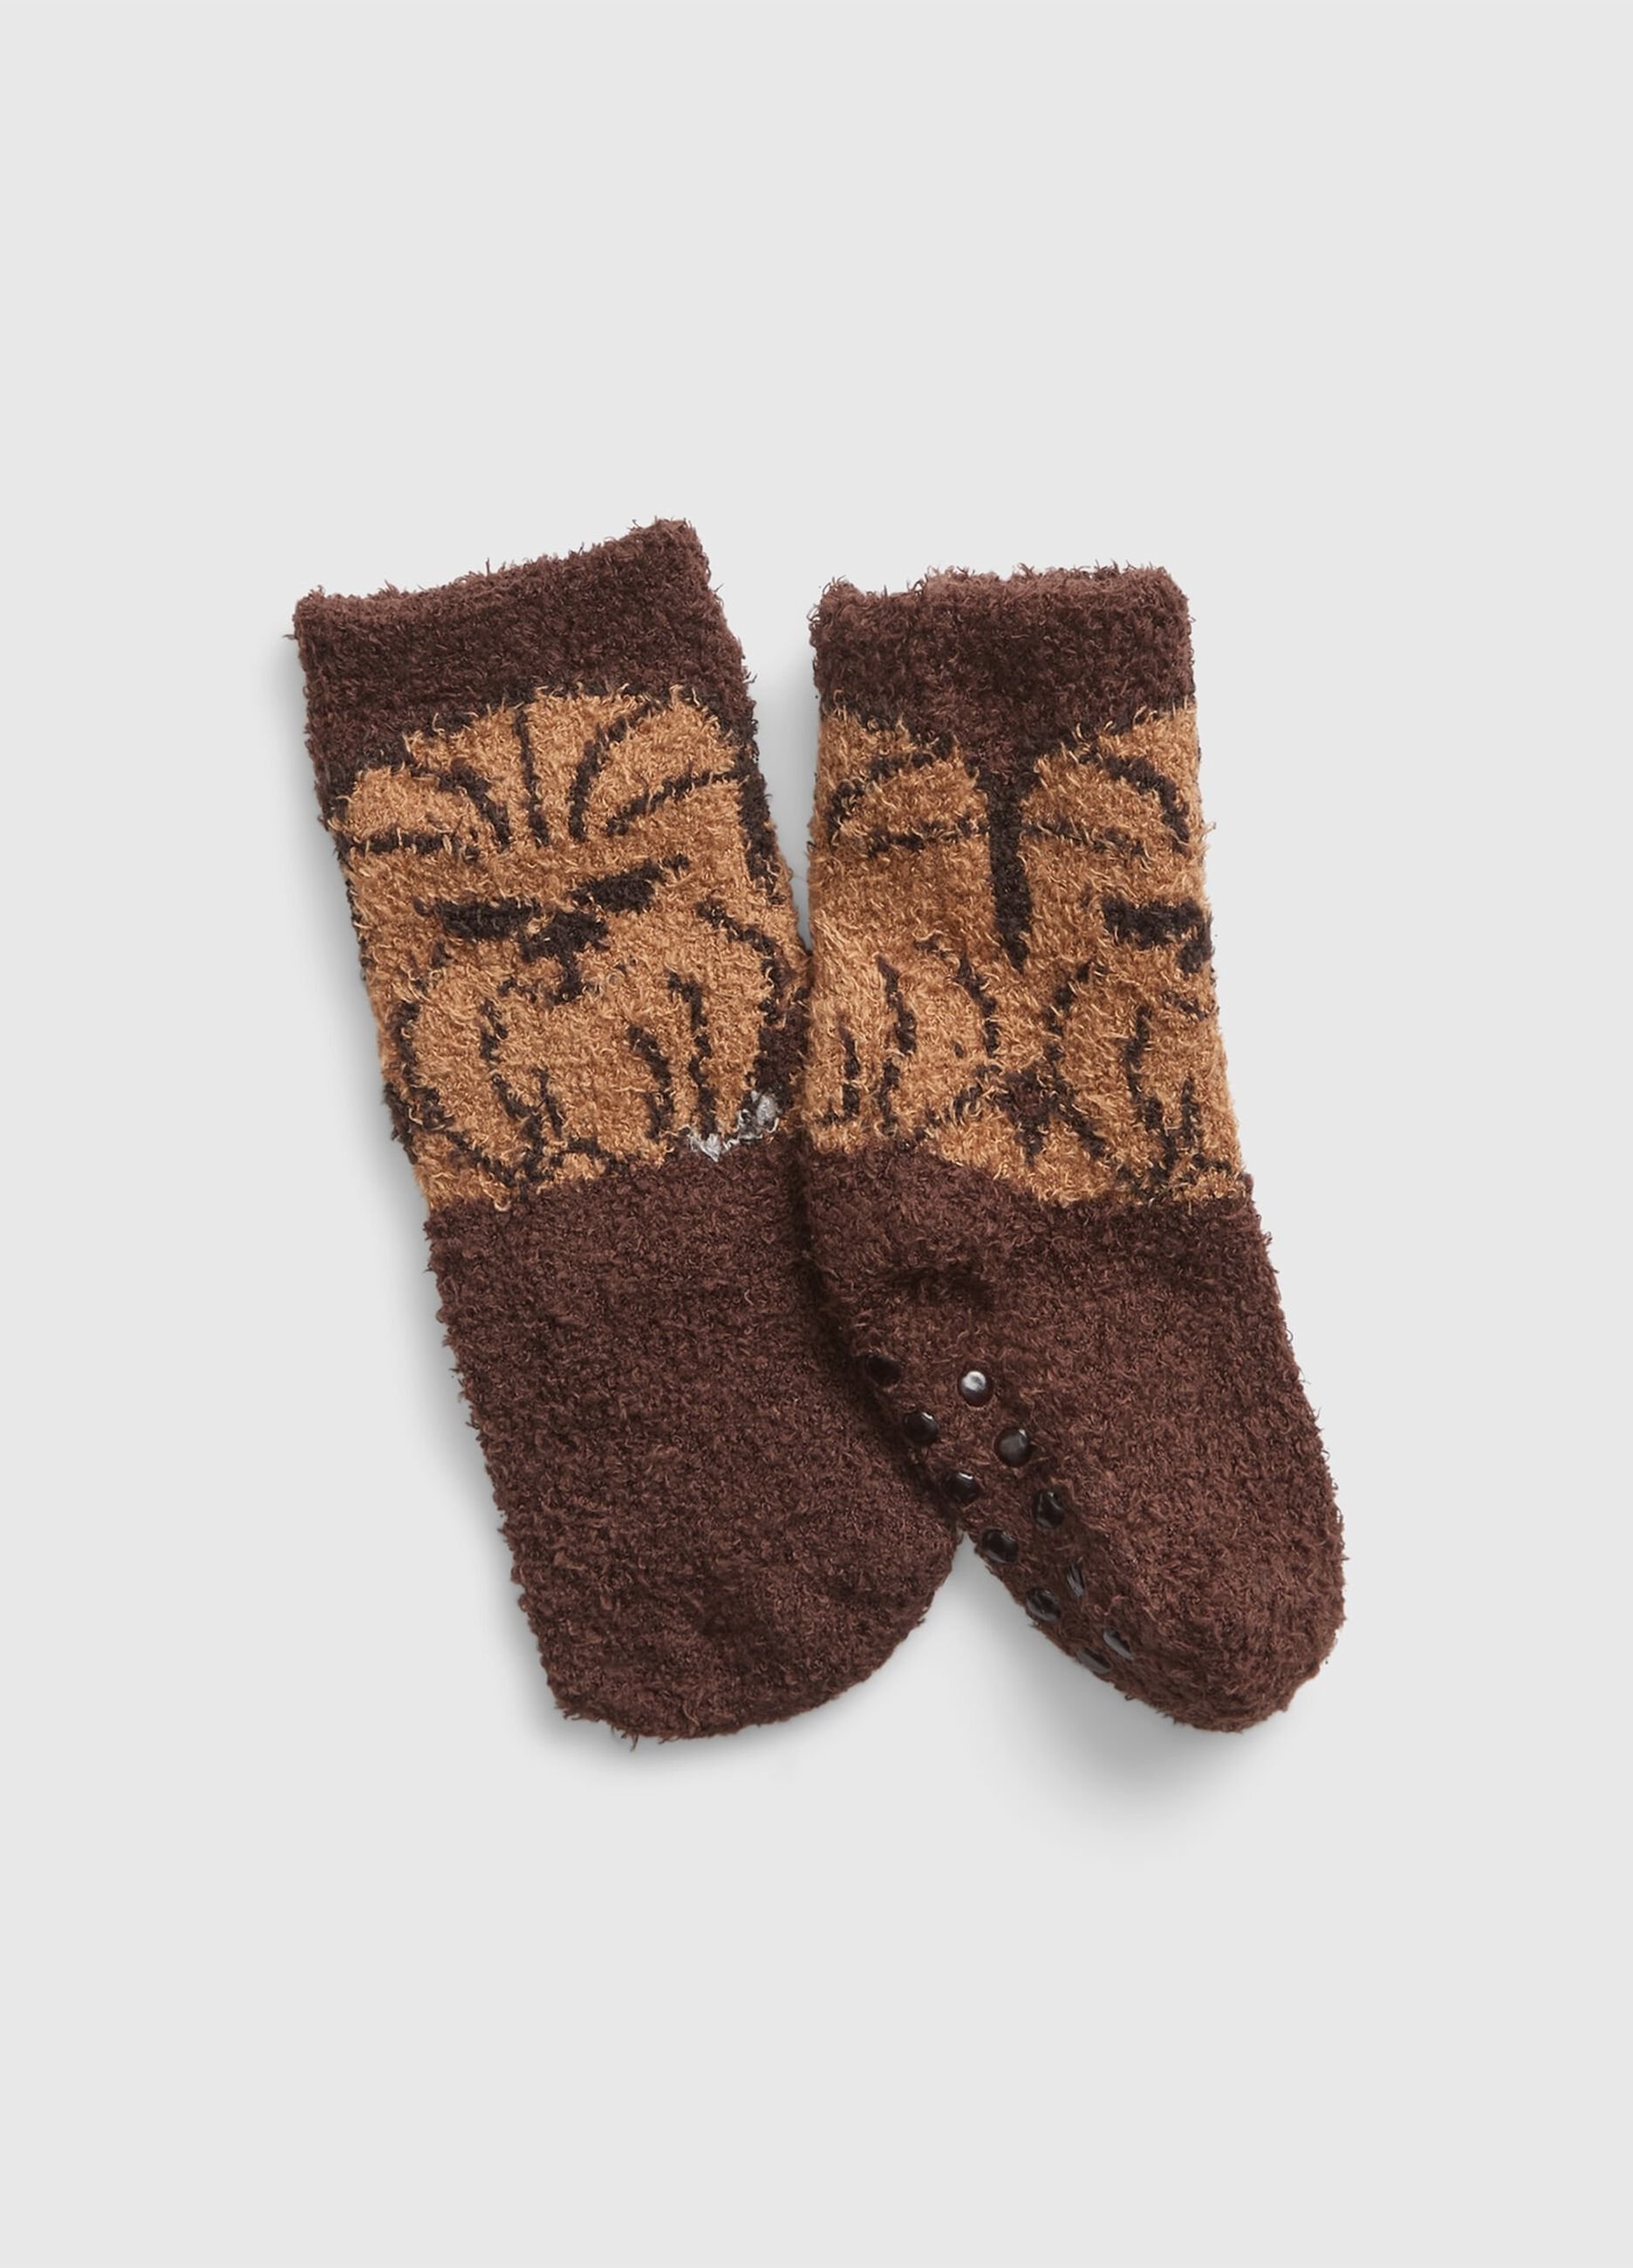 Slipper socks with Star Wars Chewbacca design_0